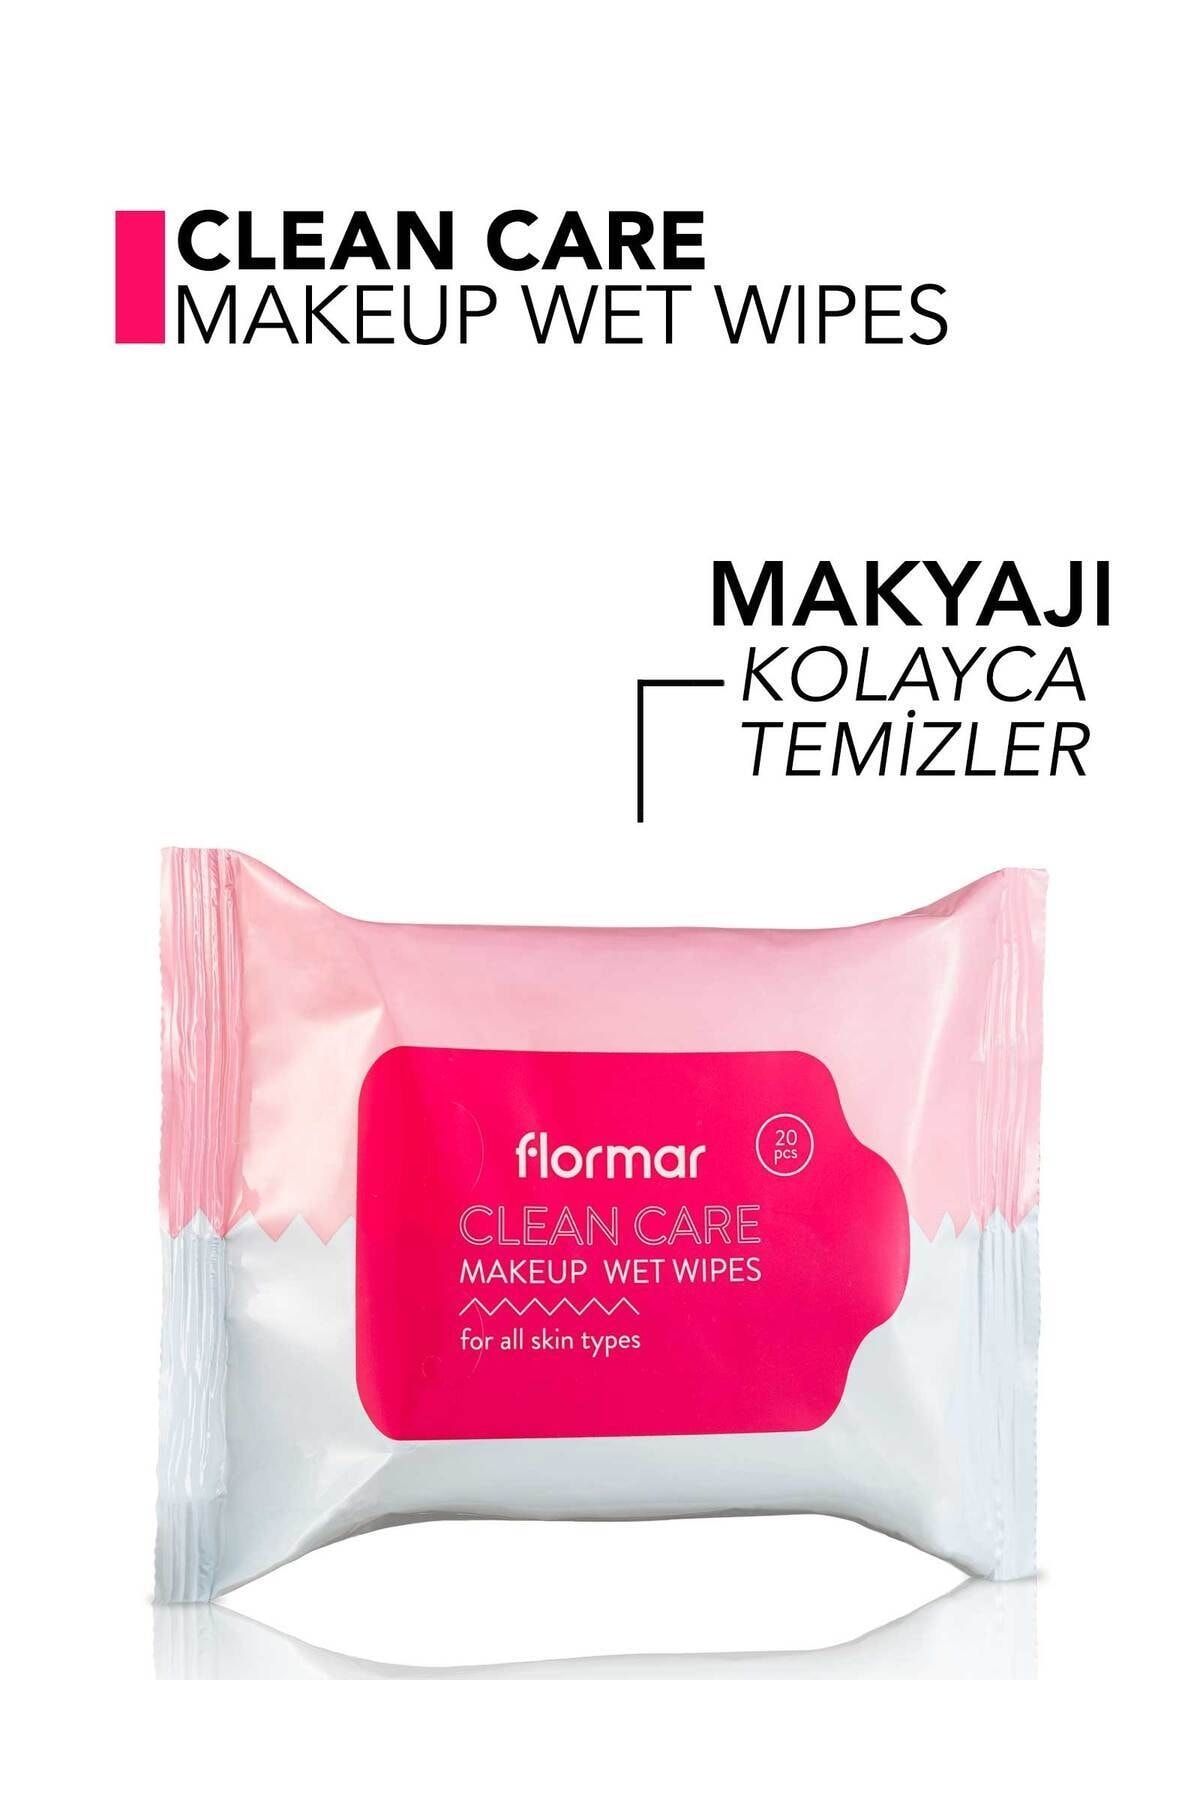 Flormar پاک کننده آرایش چشم و لب دستمال مرطوب تمیز کننده آرایش 30 عدد فلورمار